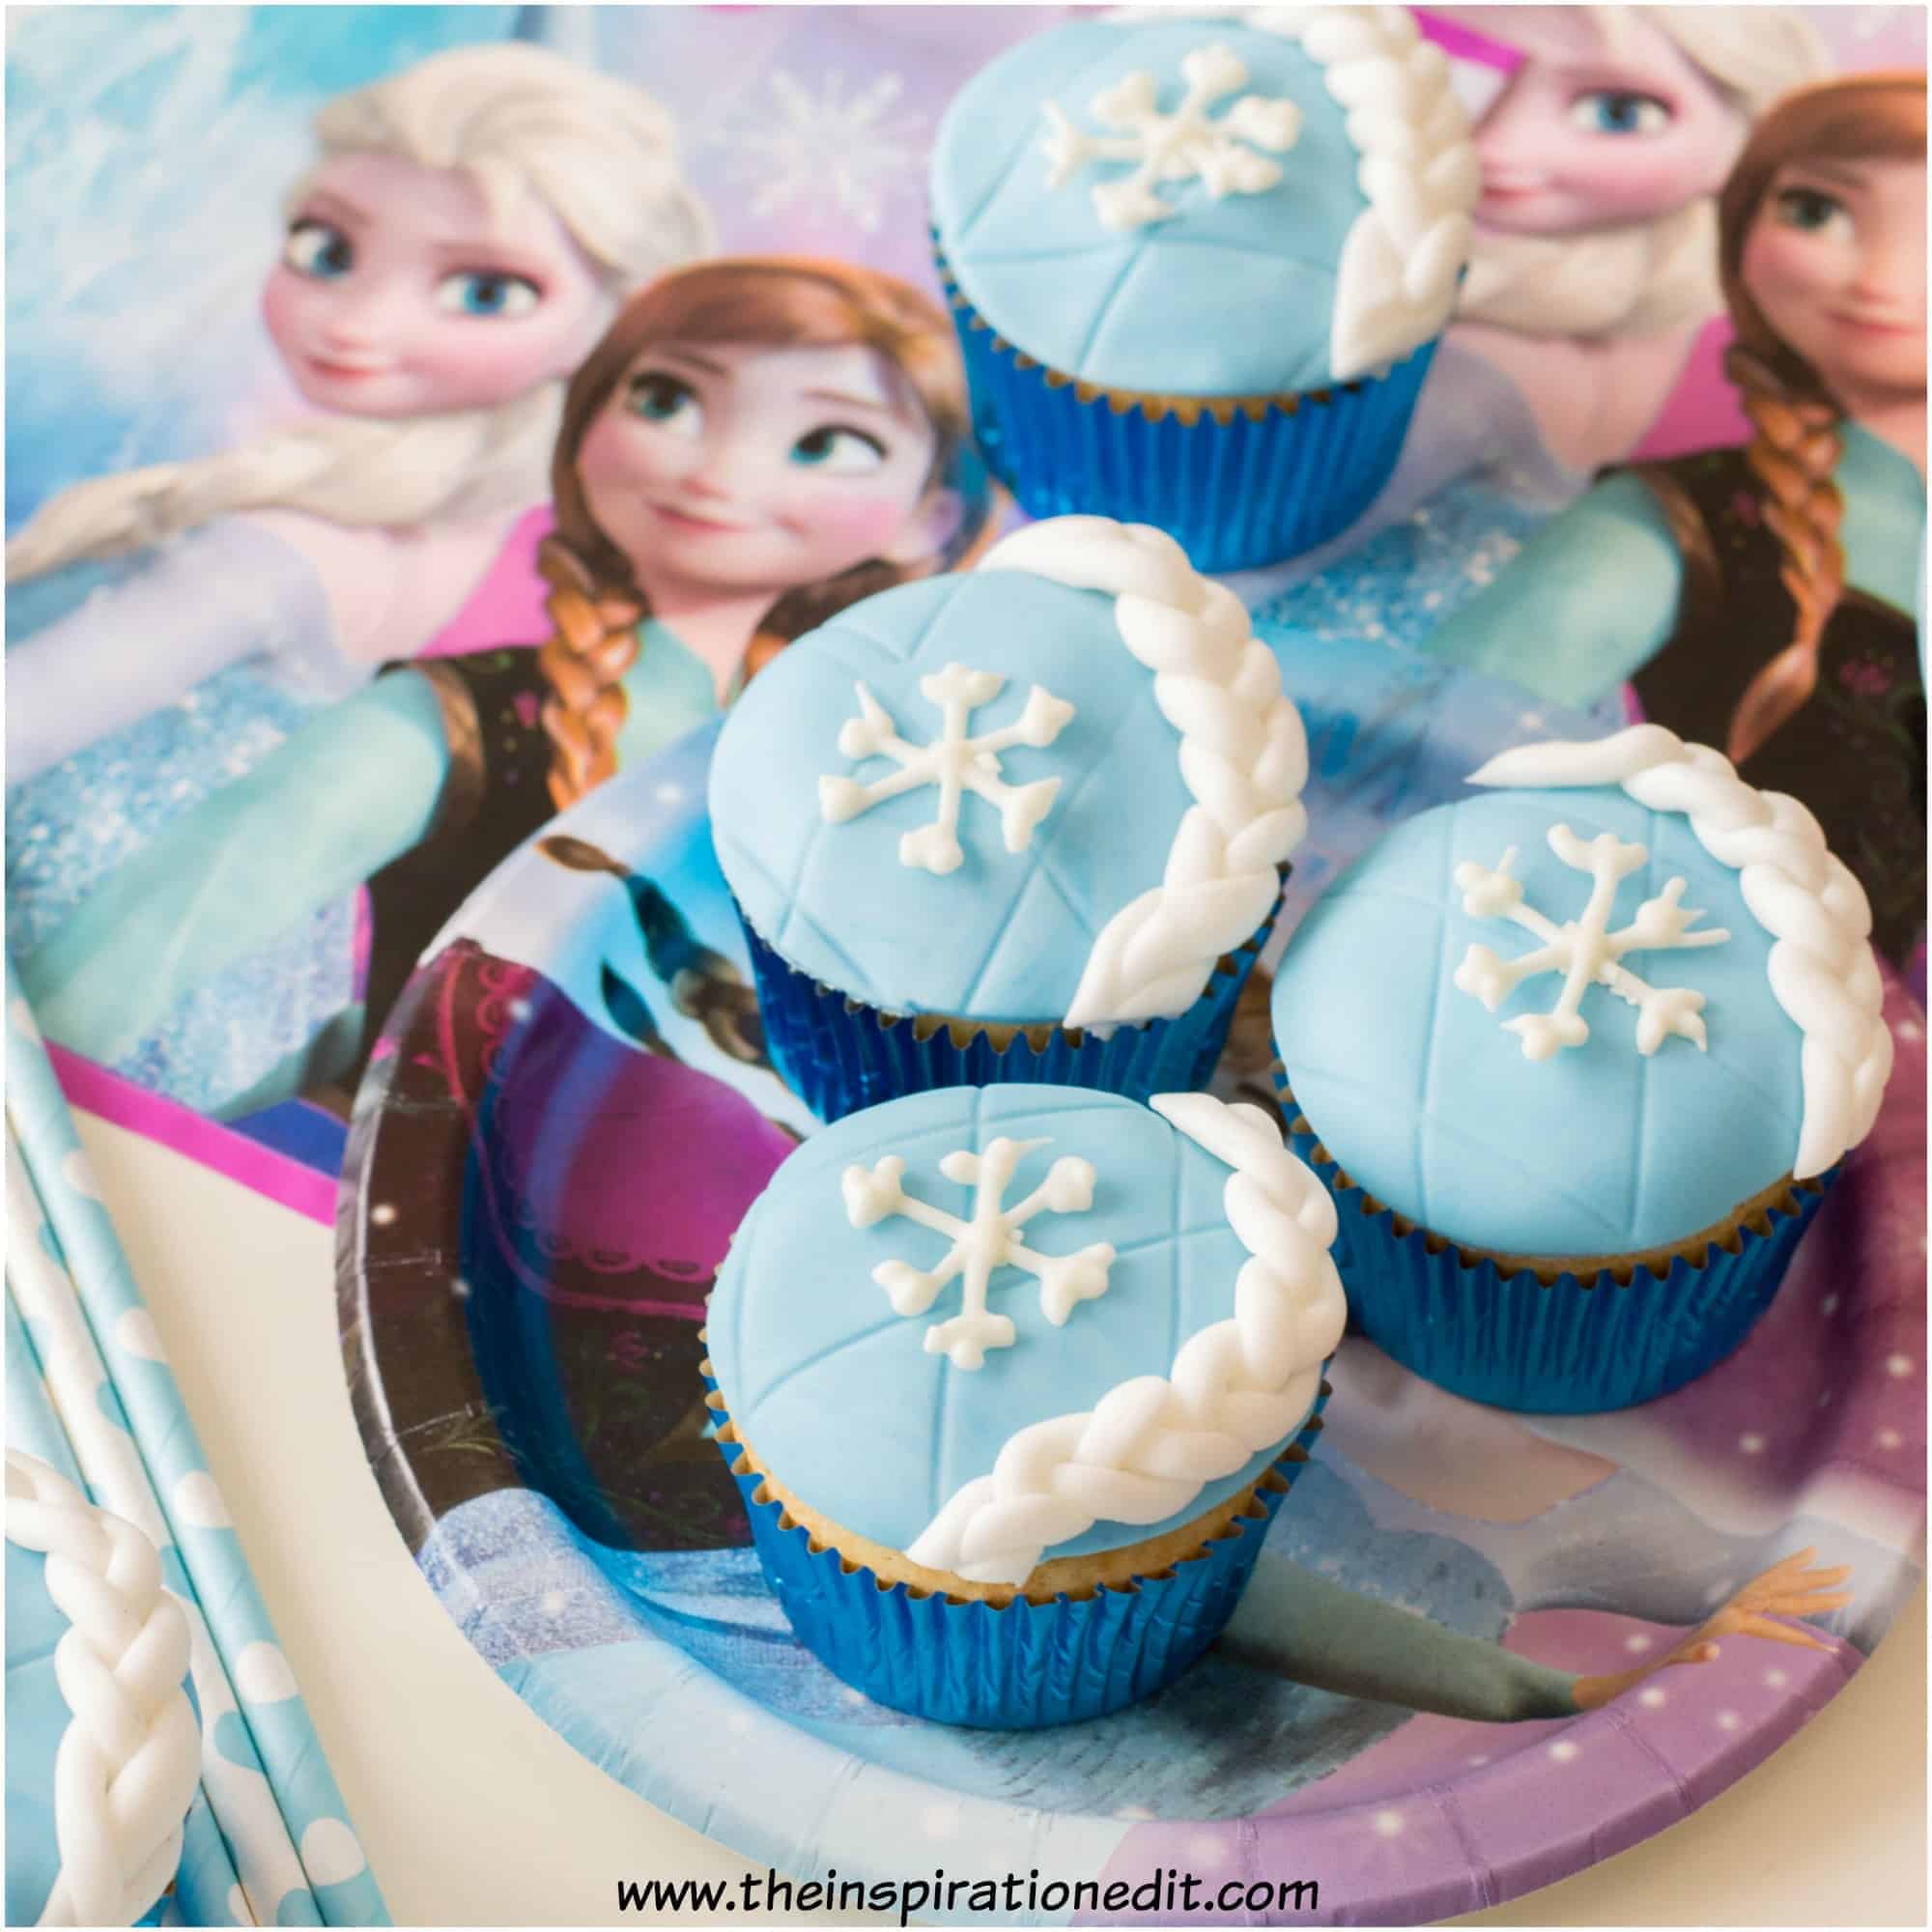 1 pz Disney Frozen Princess Elsa Birthday Party Decor Kids Cake